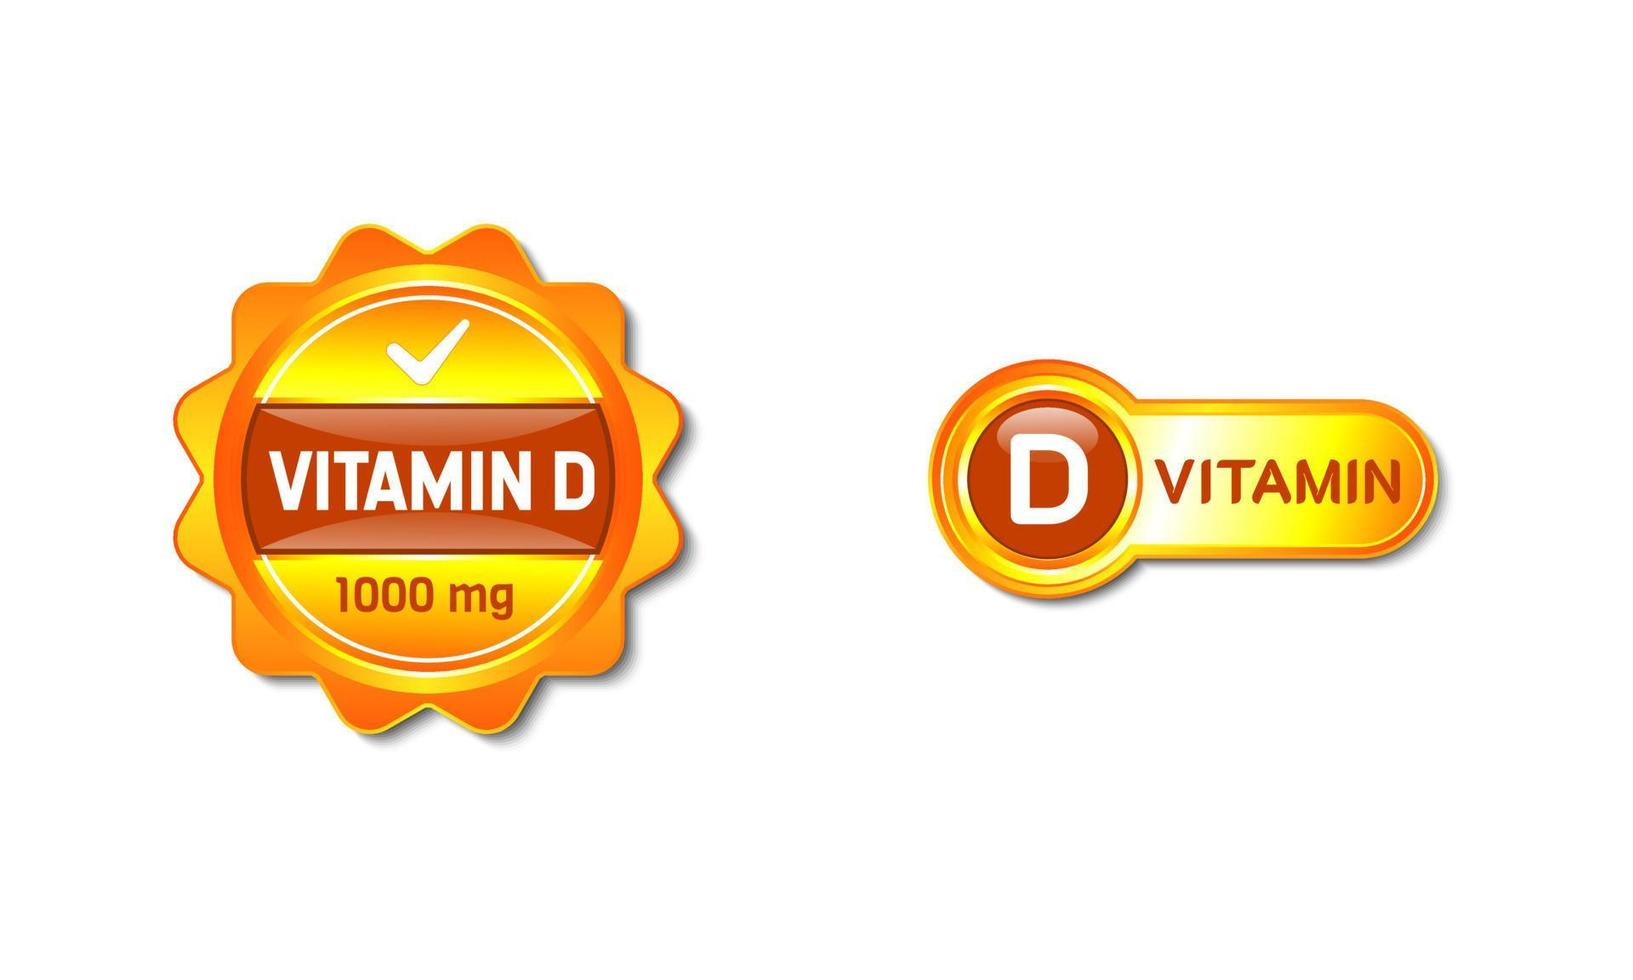 vitamine d label logo. met vinkje. op gradiënt gele en witte kleur. premium en luxe knopsjabloon vector